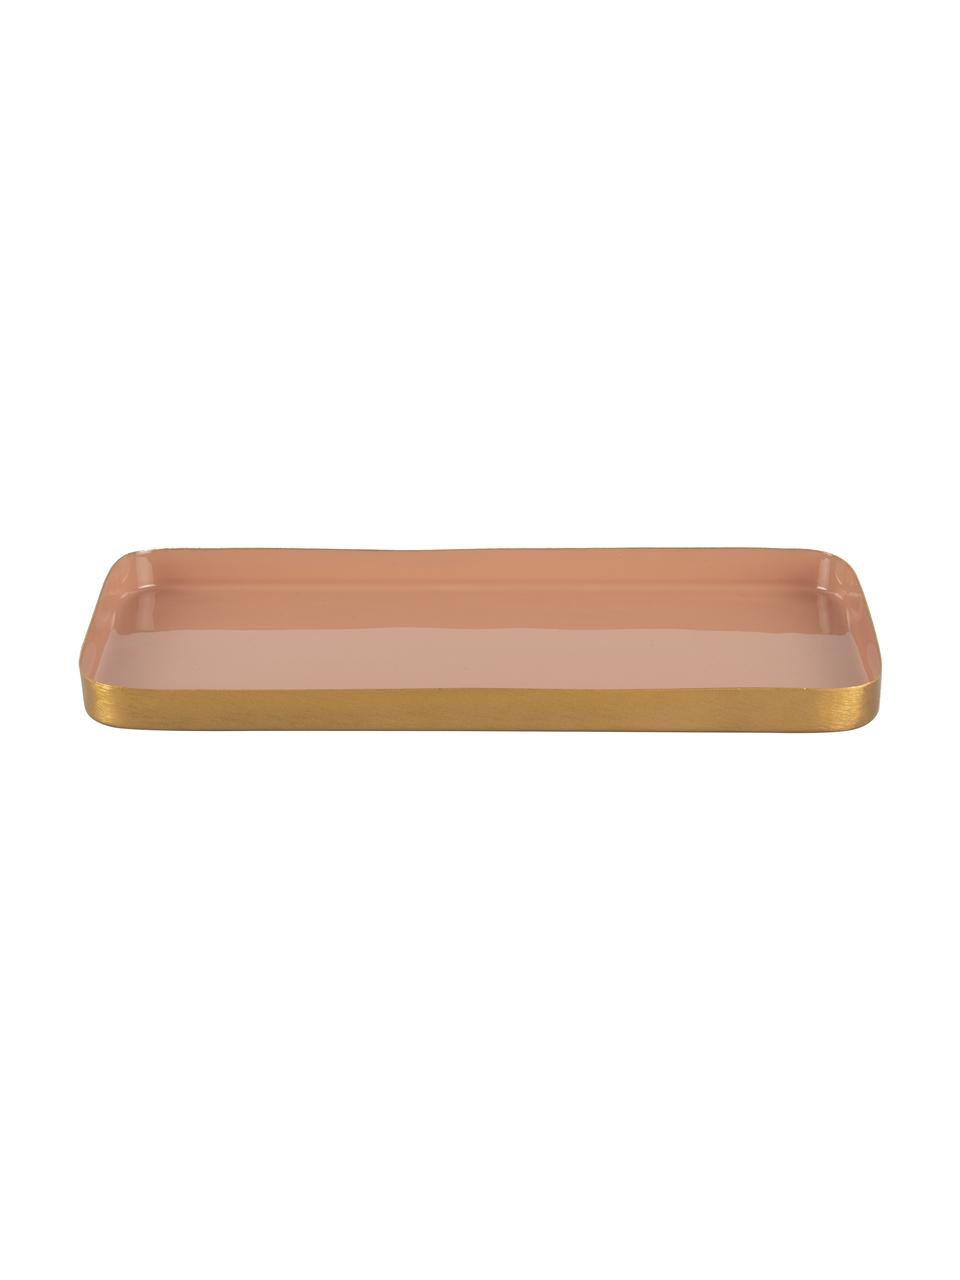 Deko-Tablett Festive mit glänzender Oberfläche in Rosa, Metall, beschichtet, Rosa, Goldfarben, L 25 x B 13 cm